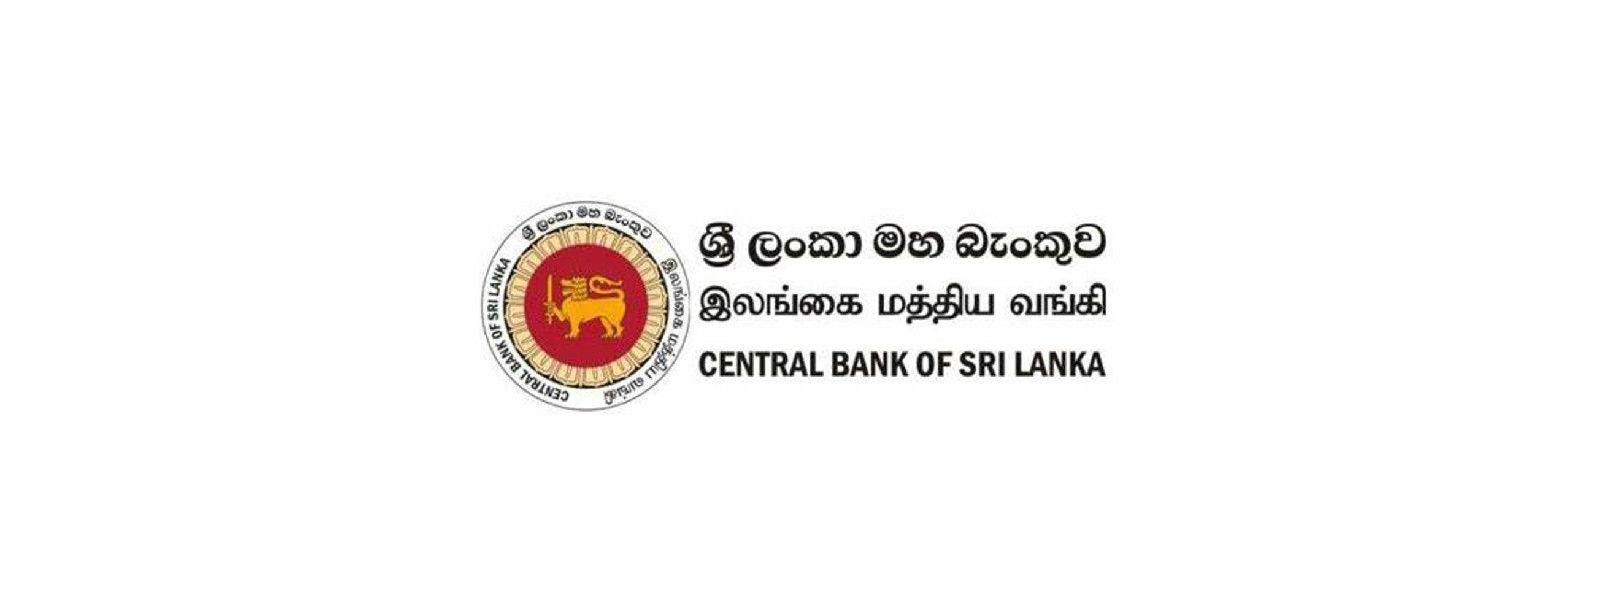 Sri Lanka records trade balance surplus after 20y